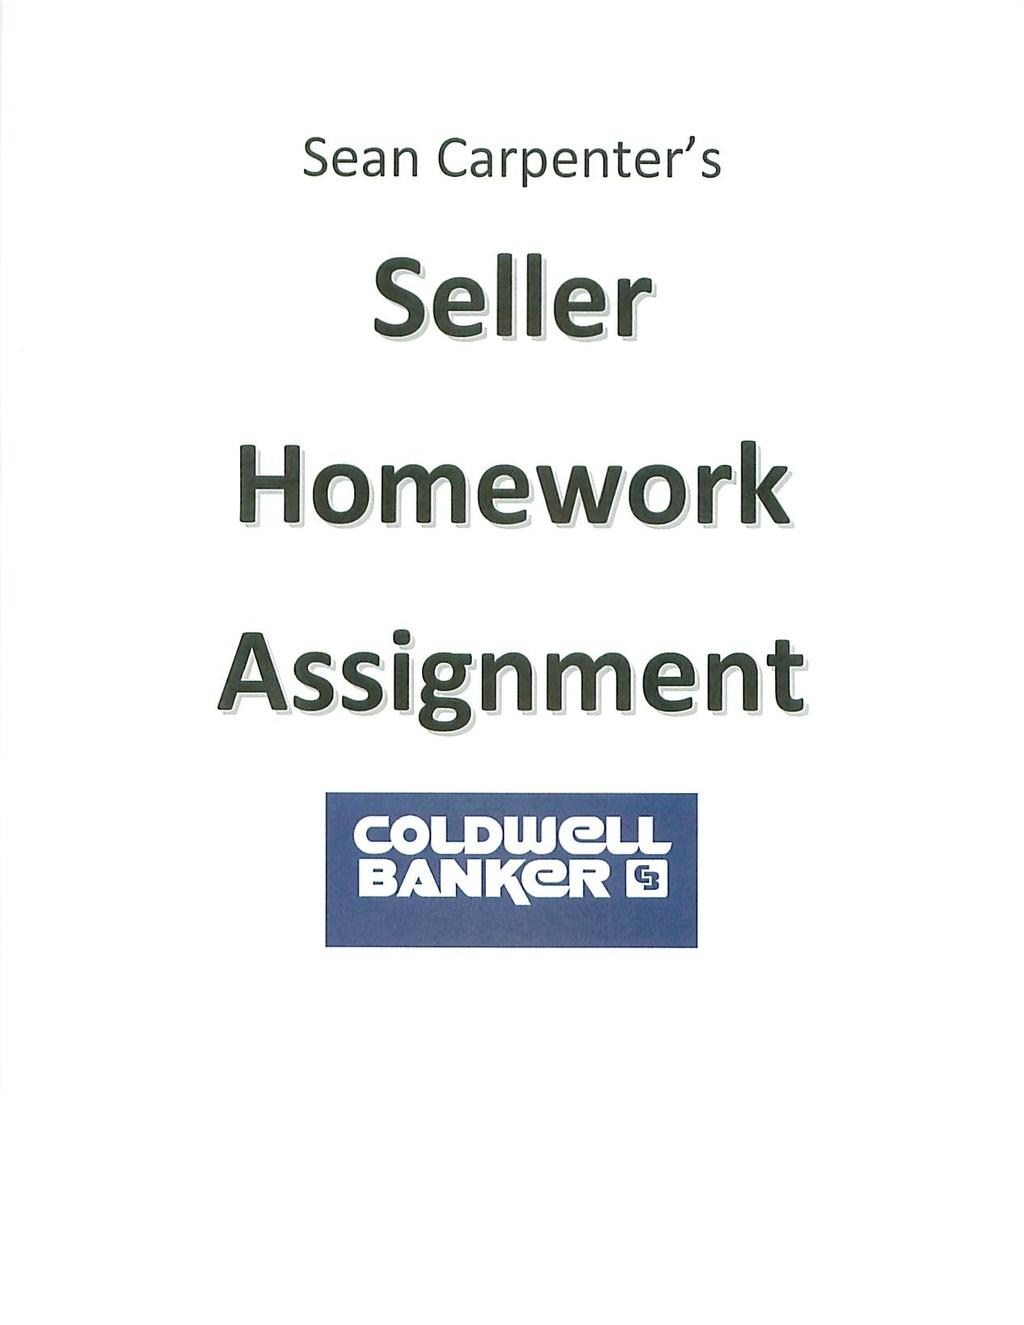 Sean Carpenter's Seller